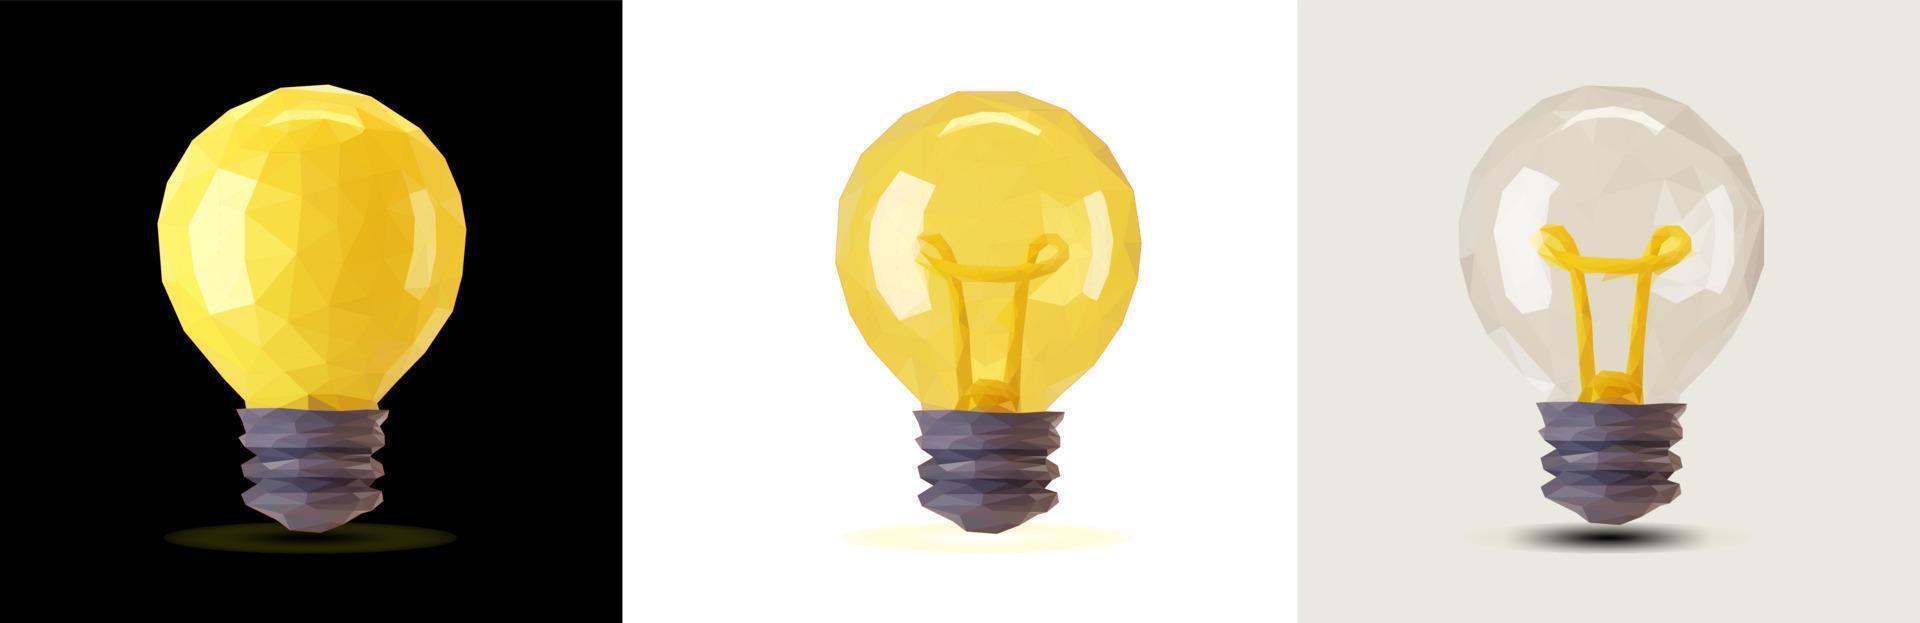 Yellow 3D low poly light bulb model. Polygon light bulb vector illustration on black background.